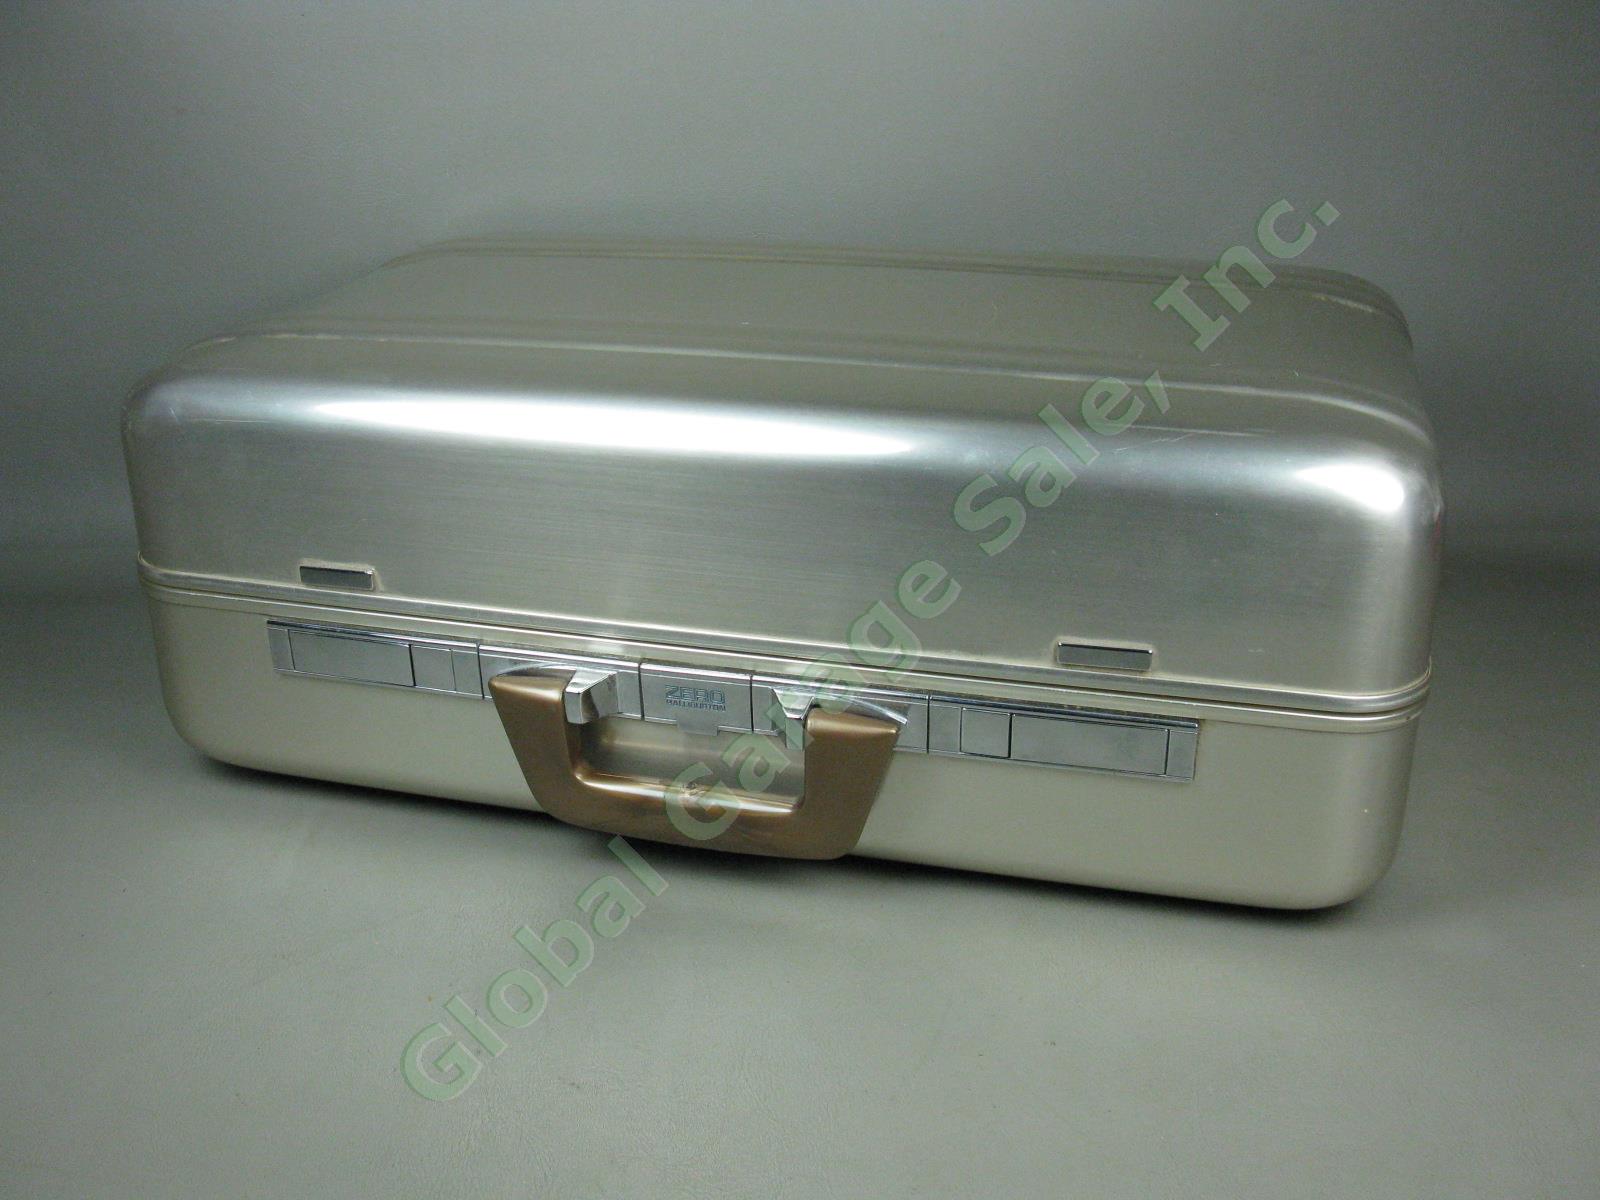 Zero Halliburton Presto Aluminum Combo Lock Briefcase Suitcase Luggage 21x13x8